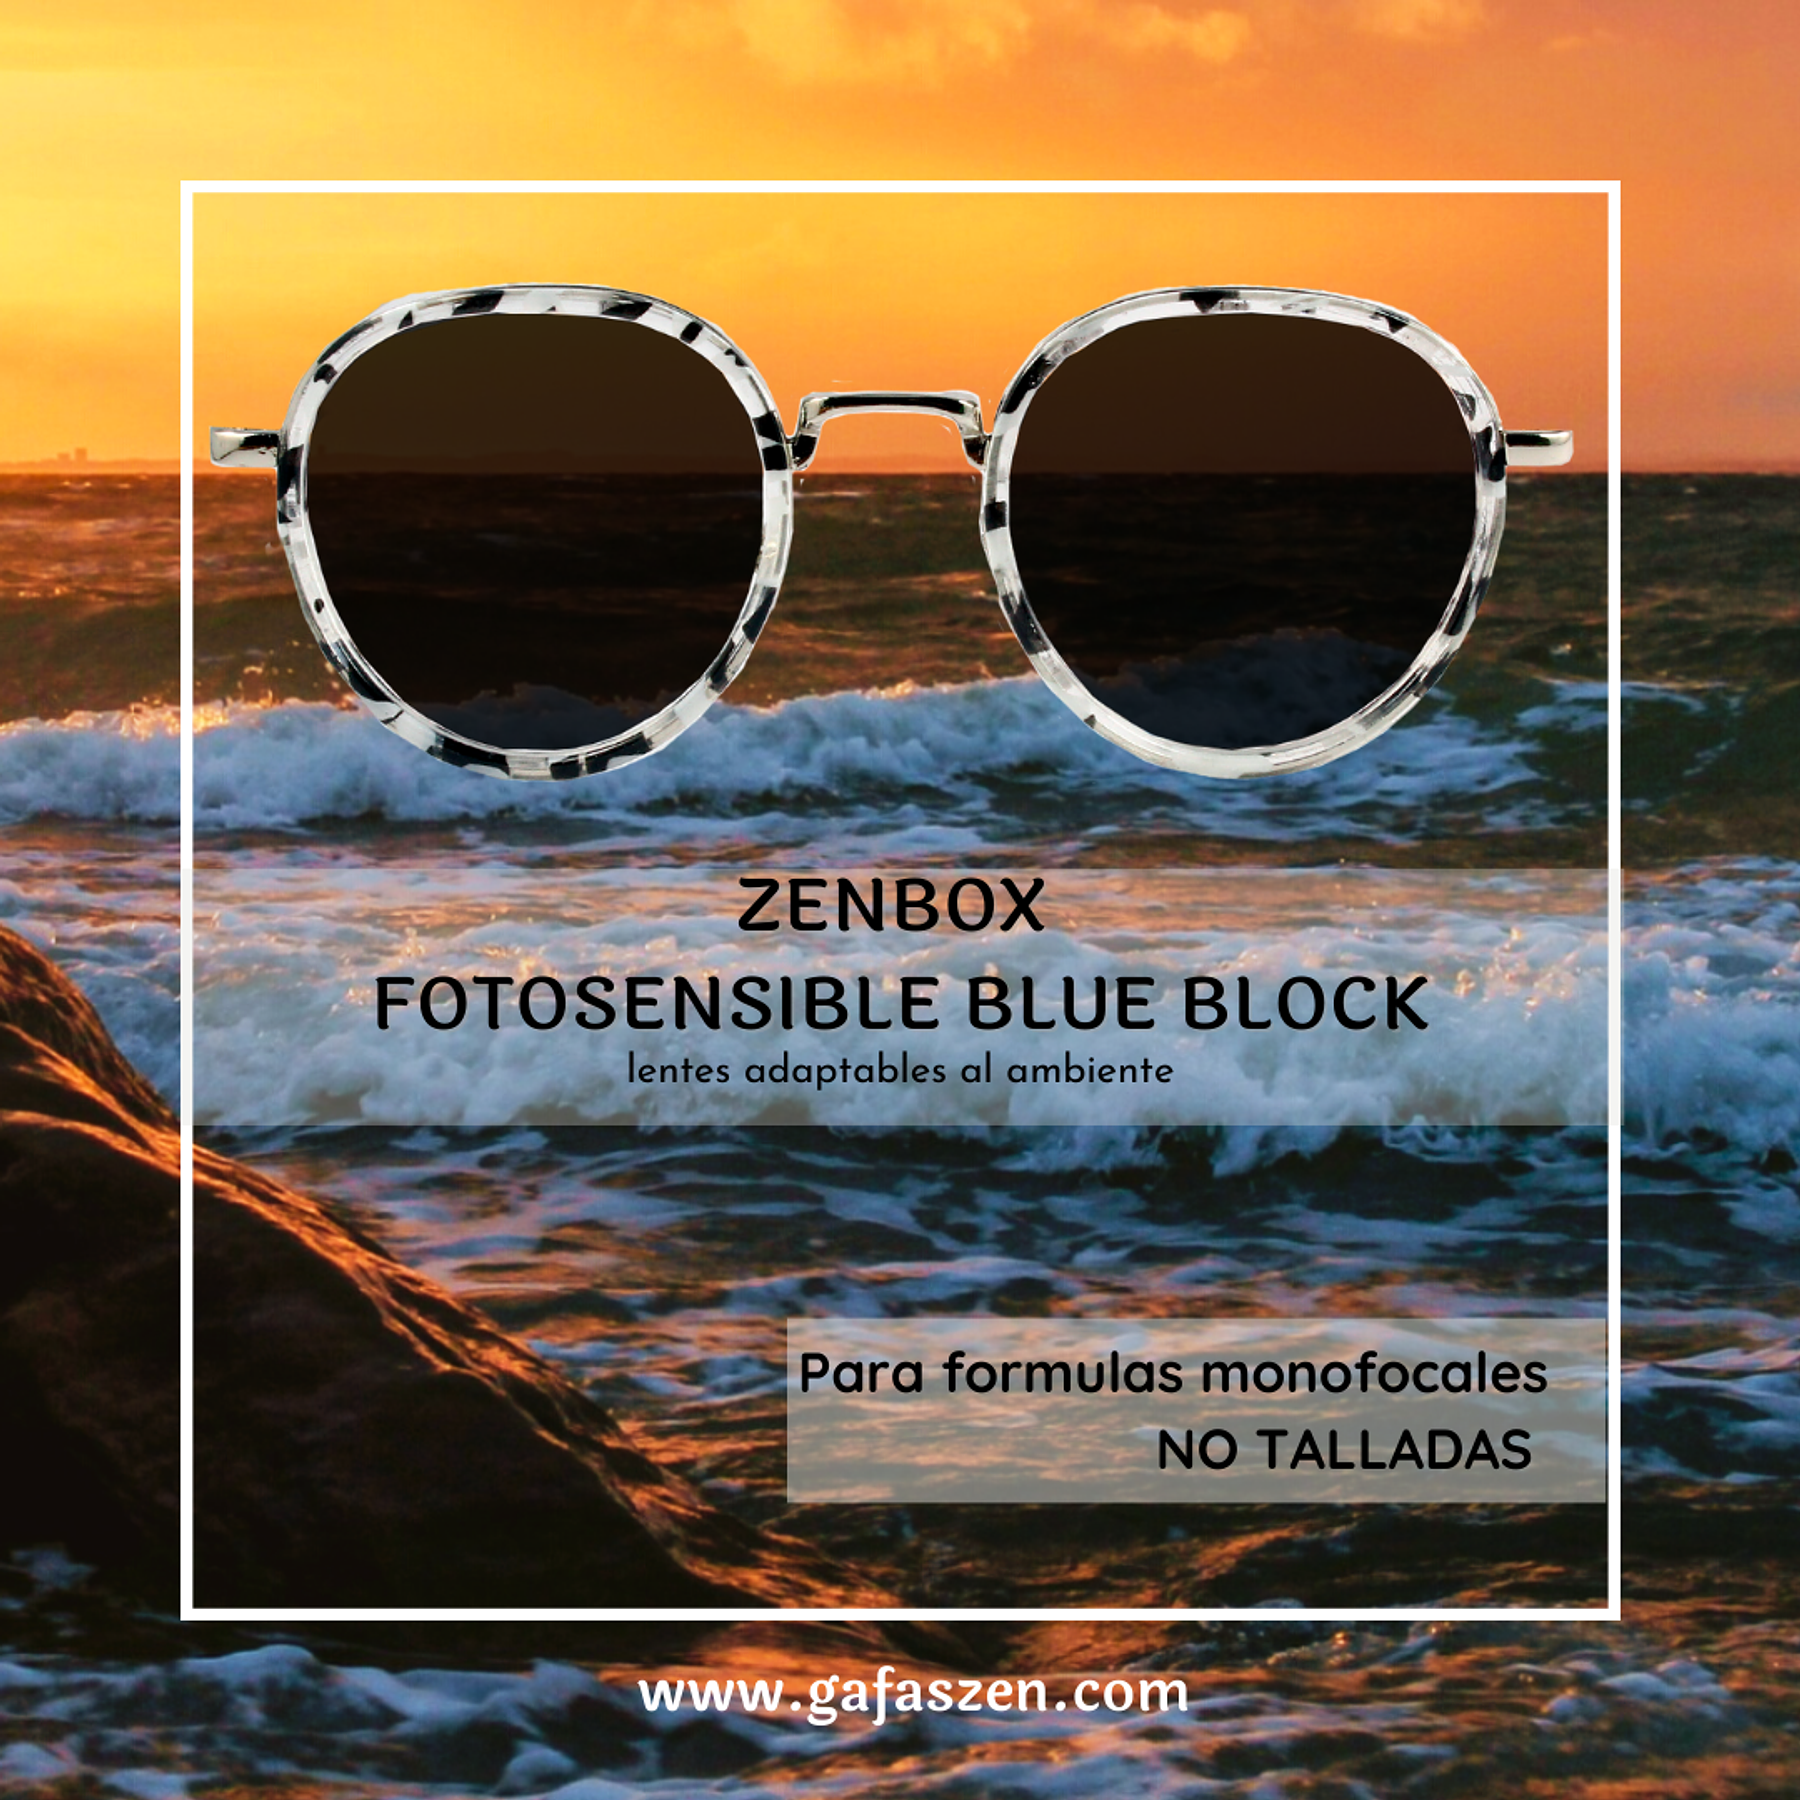 ZENBOX Fotosensible Blue Block